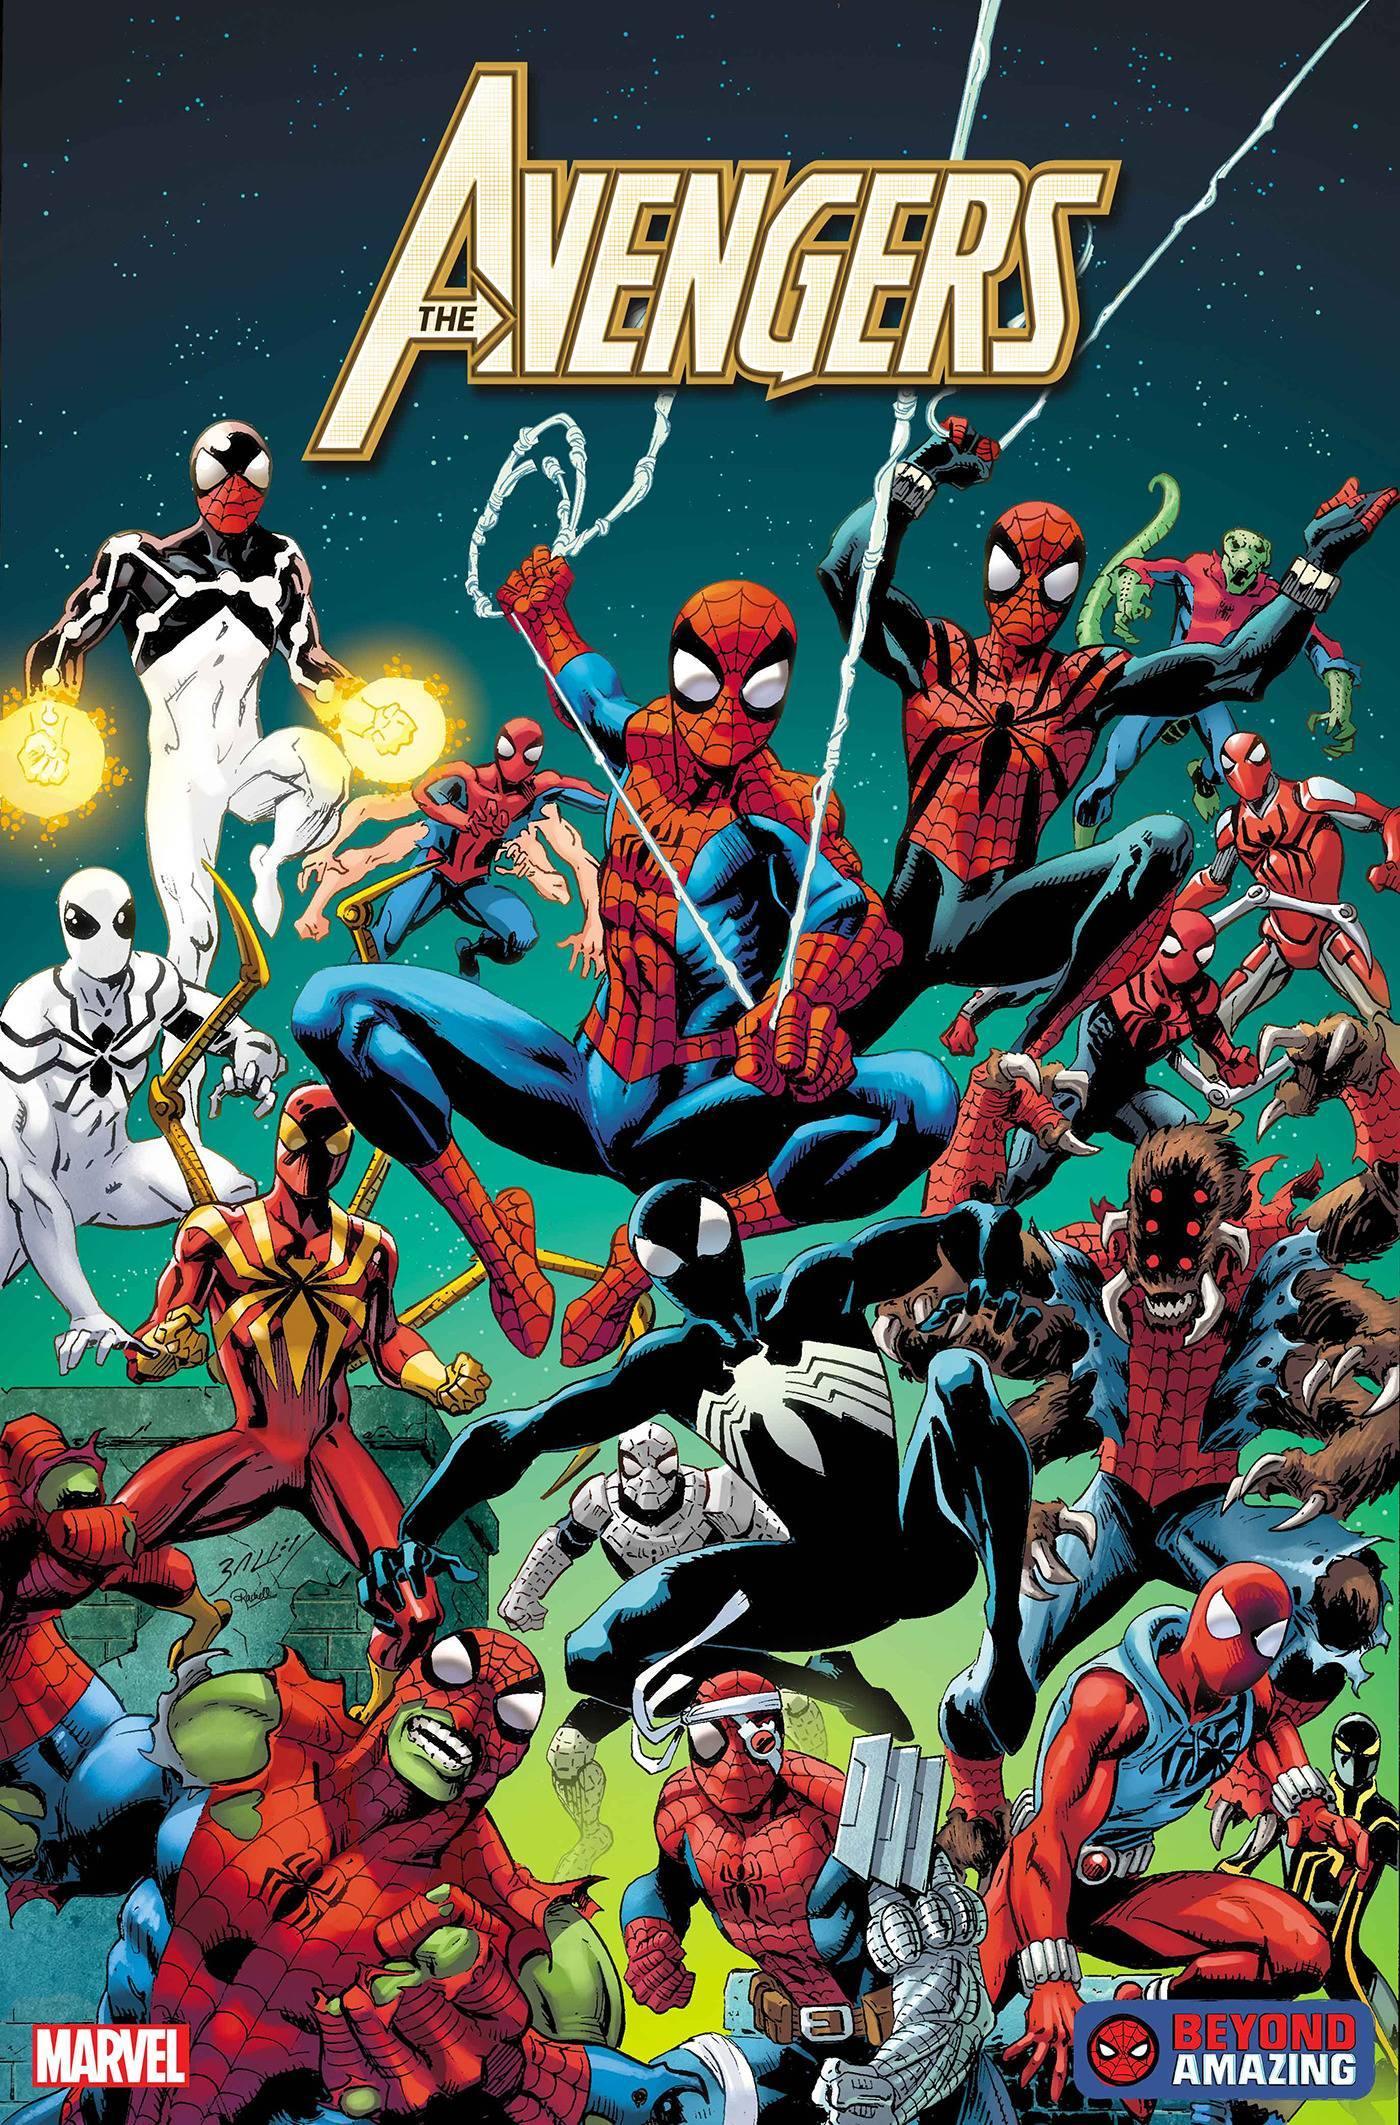 AVENGERS VOL 7 #59 BAGLEY BEYOND AMAZING SPIDER-MAN VAR - Kings Comics